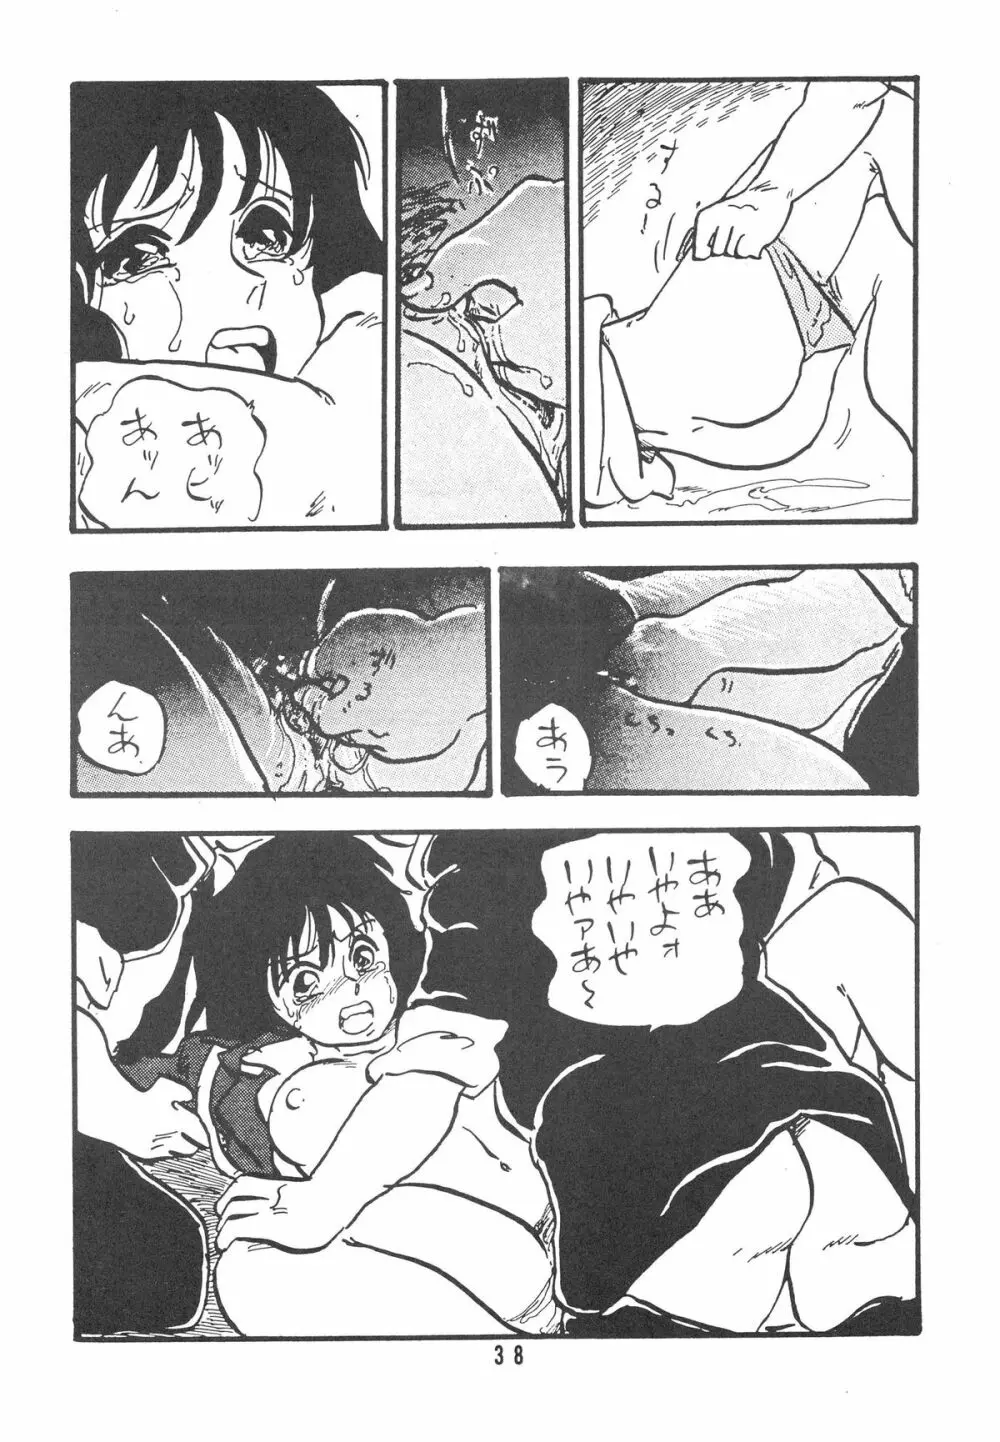 HANAKO 花子 - page38